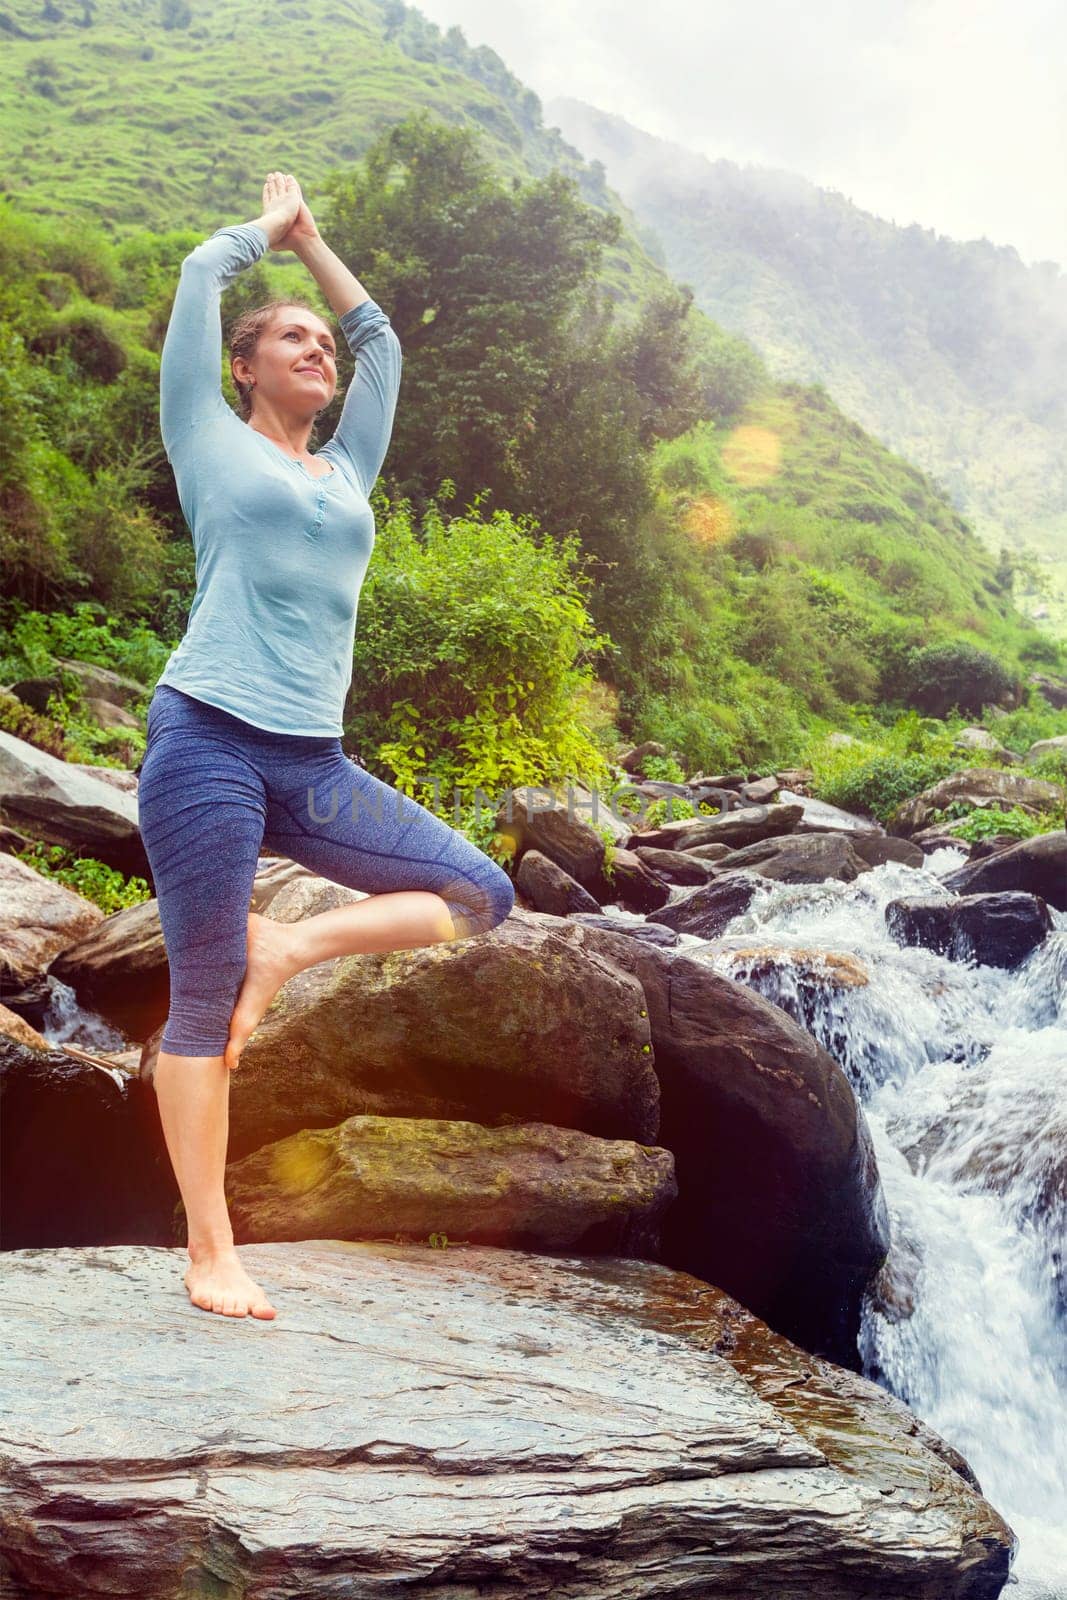 Woman in yoga asana Vrikshasana tree pose at waterfall outdoors by dimol